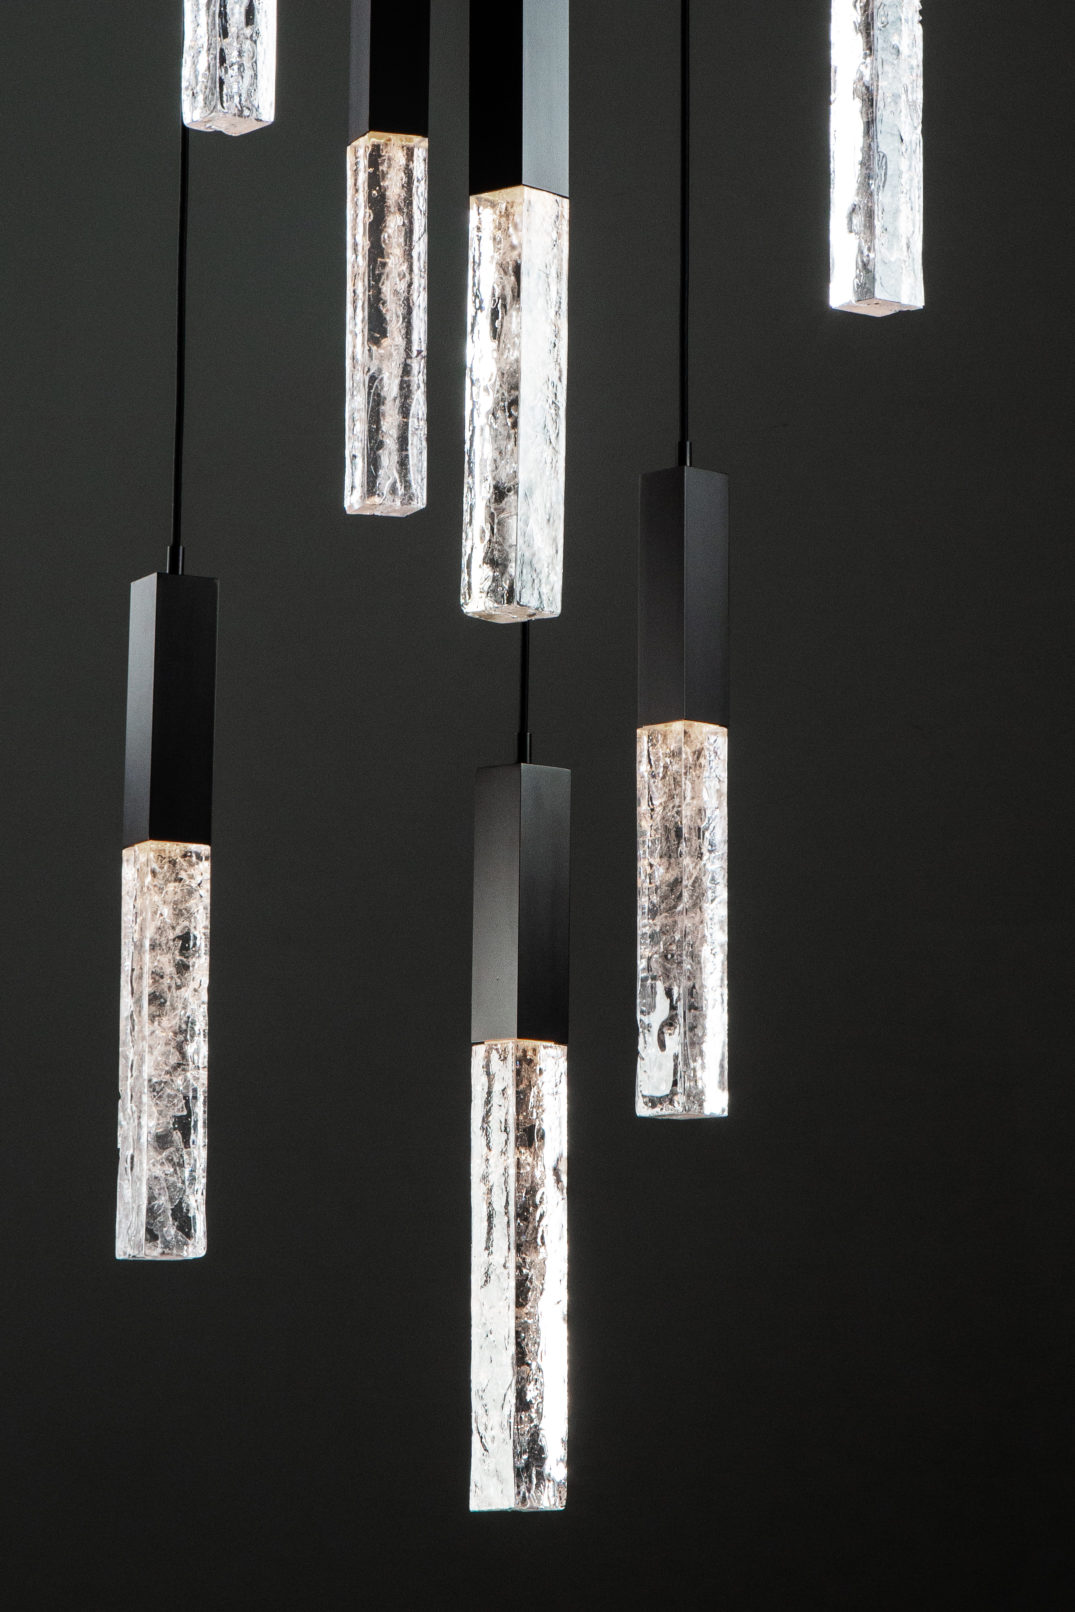 Detail of a Hammerton Studio Axis multi-light pendant light fixture highlighting the beauty of cast glass